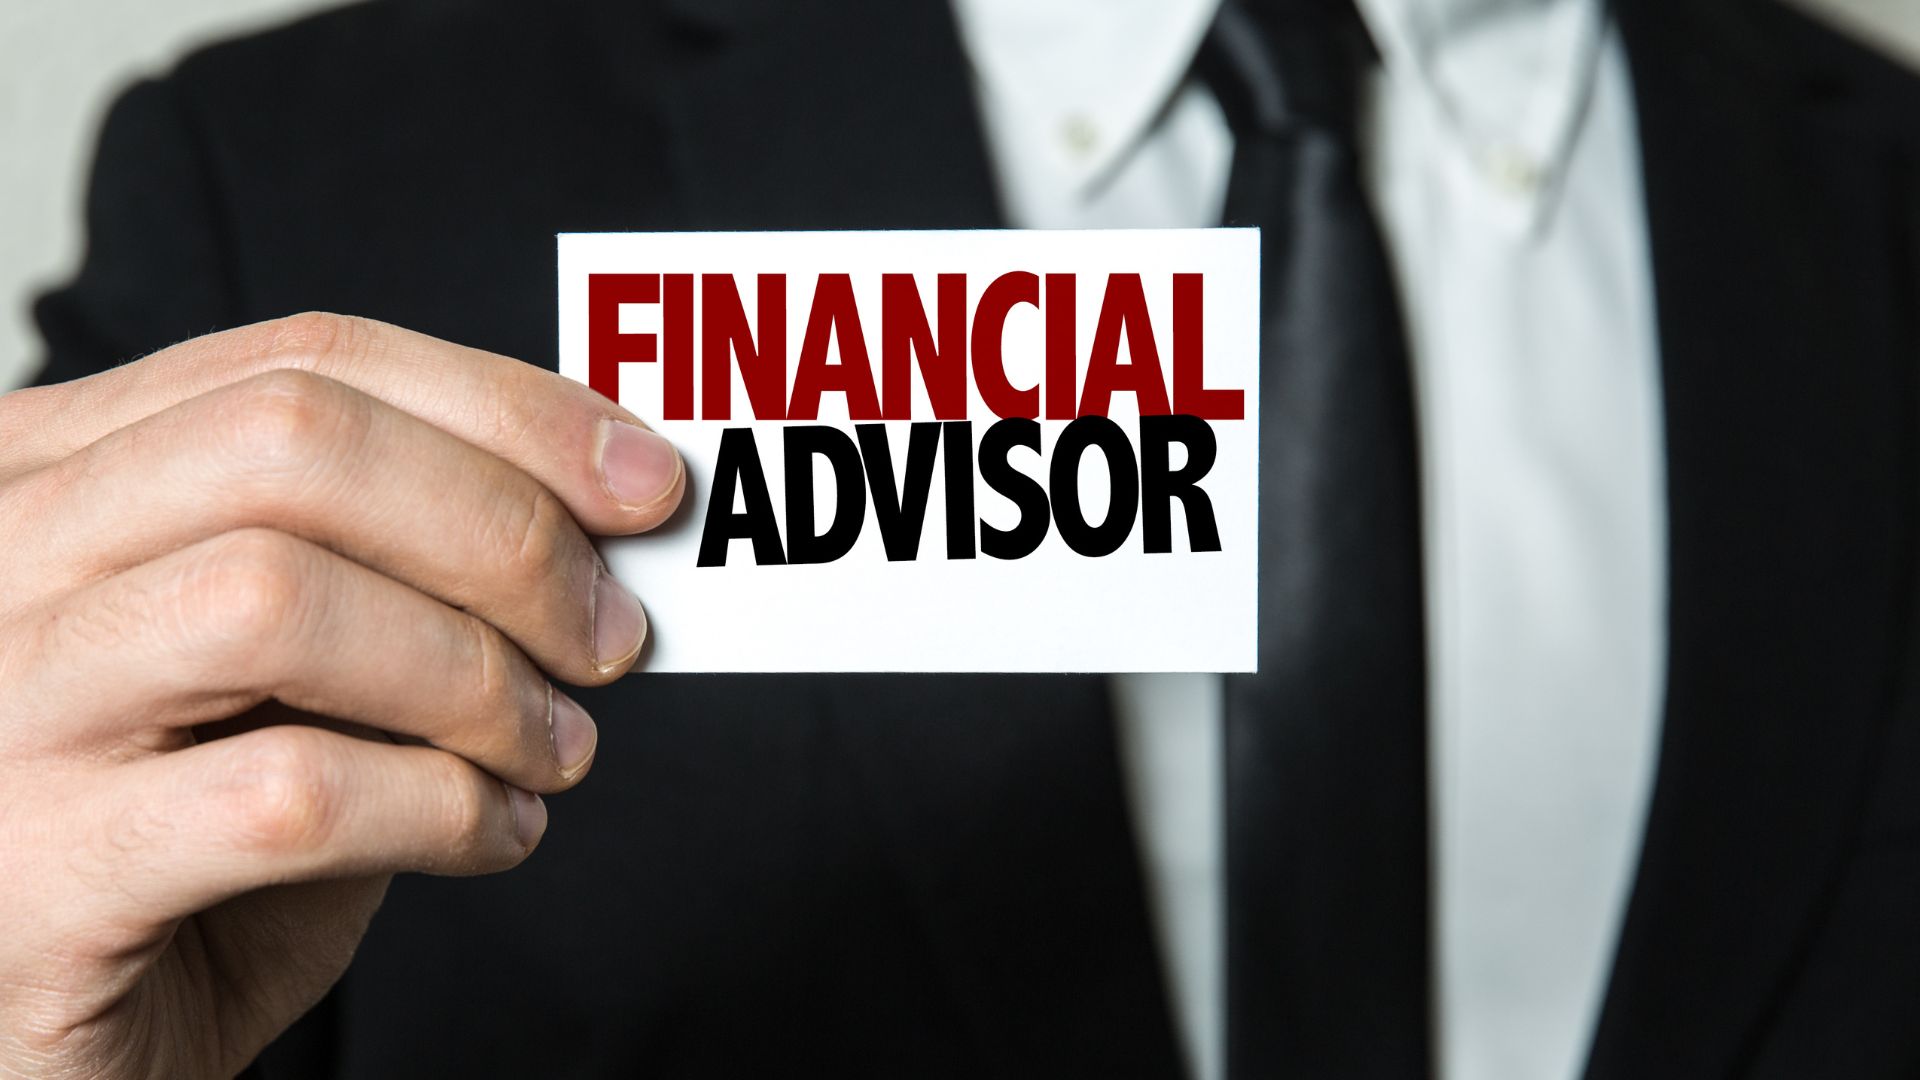 Financial Advisor Services